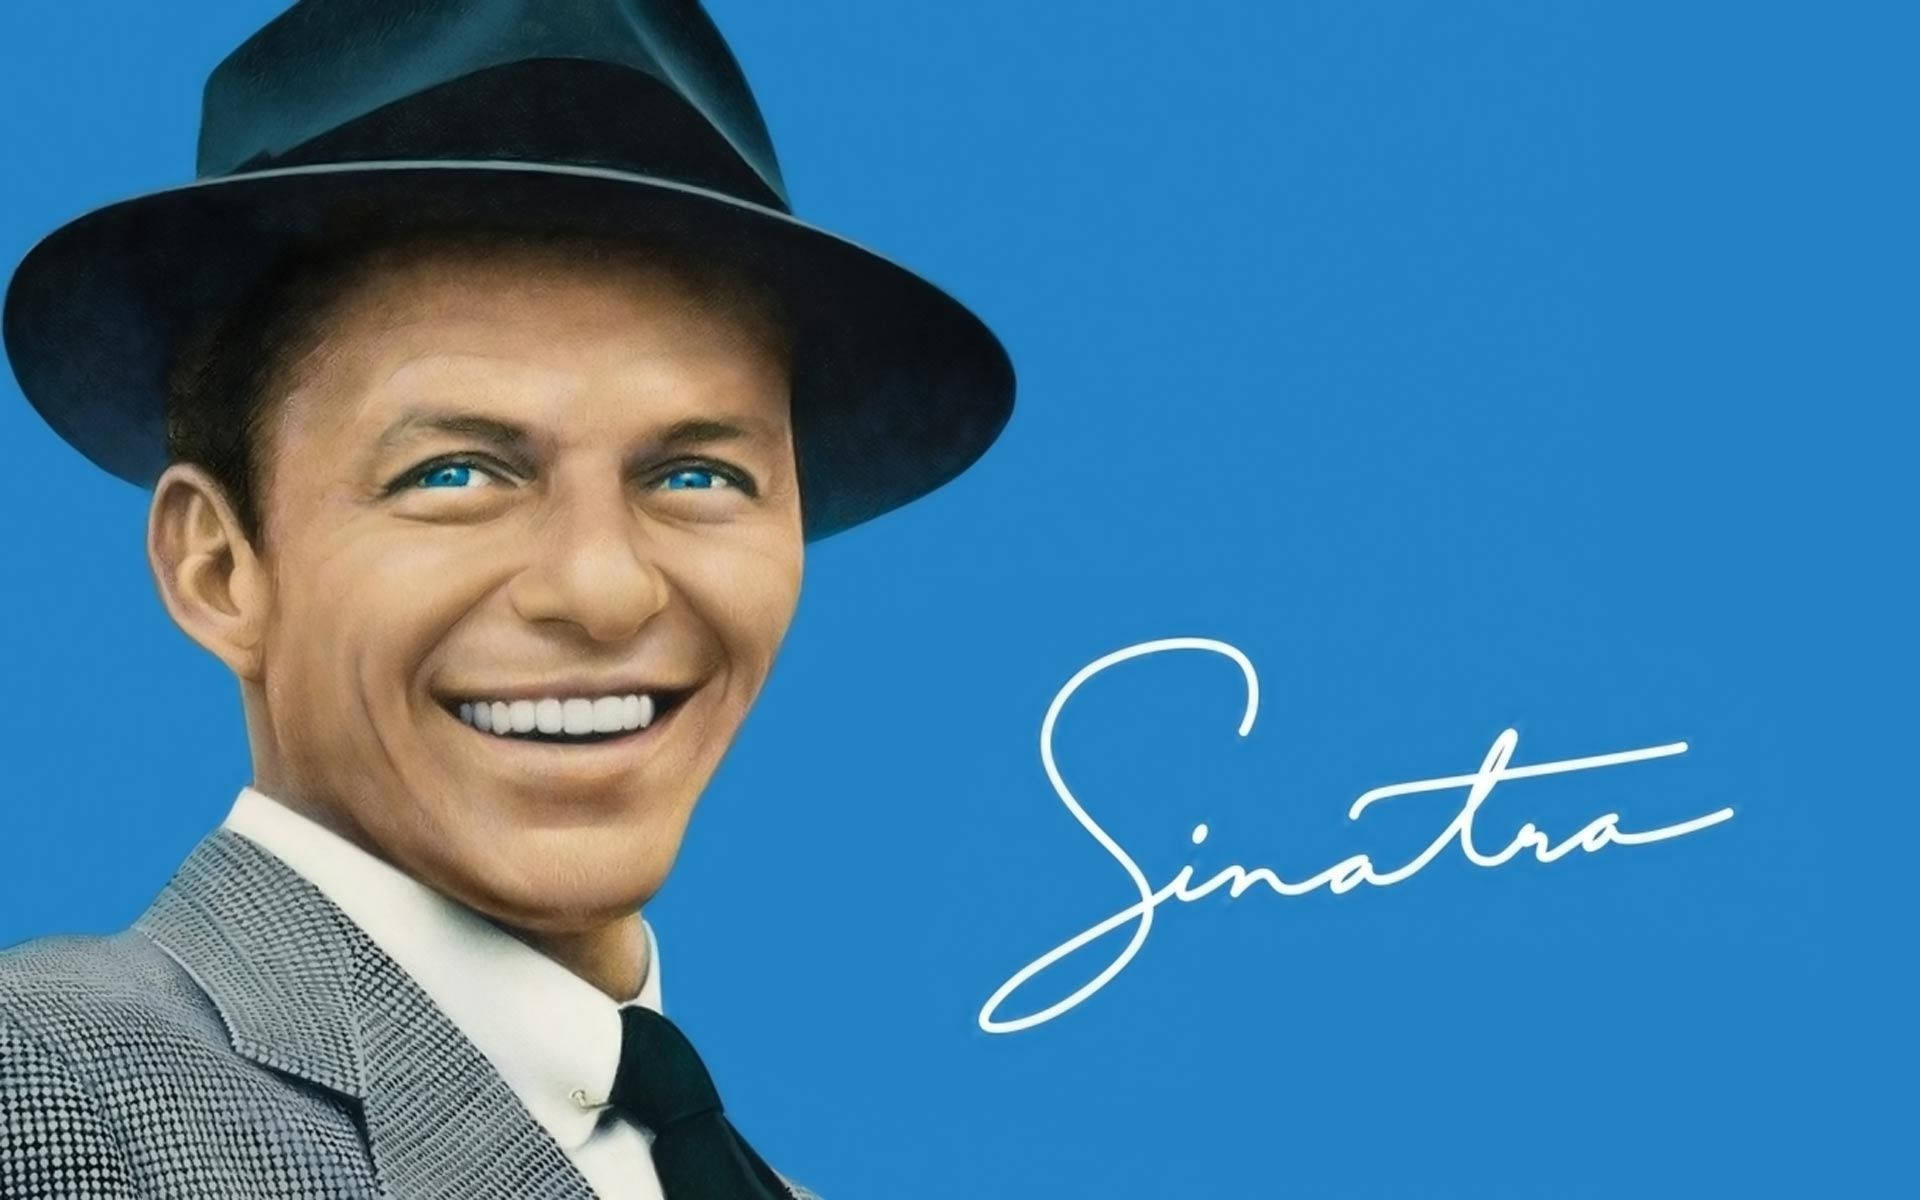 Frank Sinatra Background Wallpaper